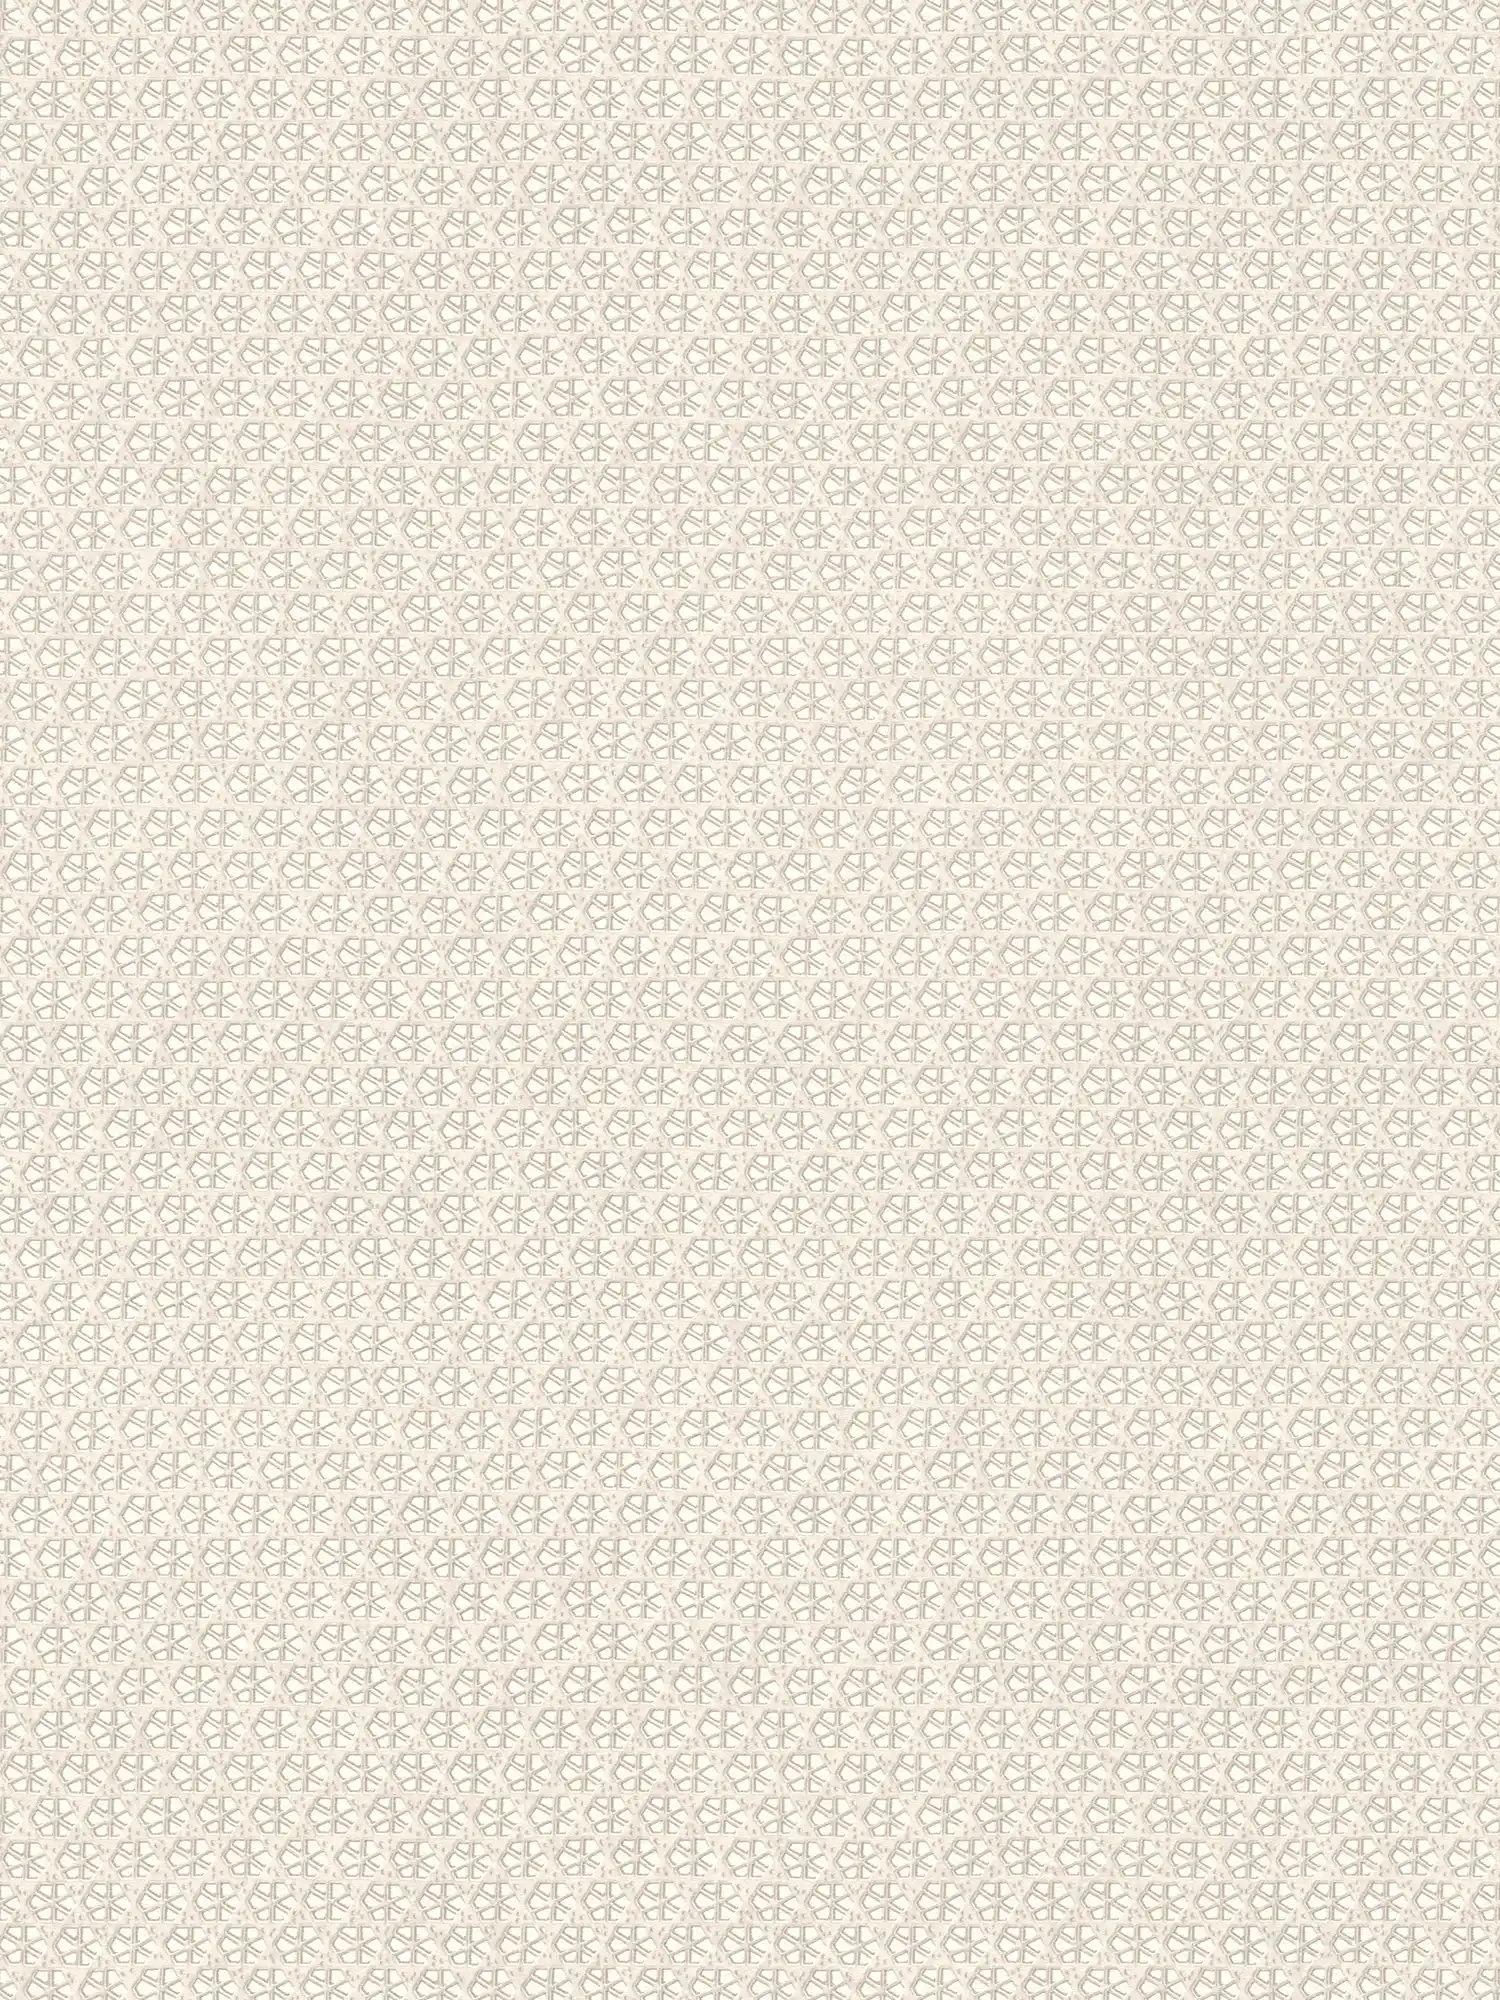 Wallpaper rattan pattern in Japandi style - grey, white
